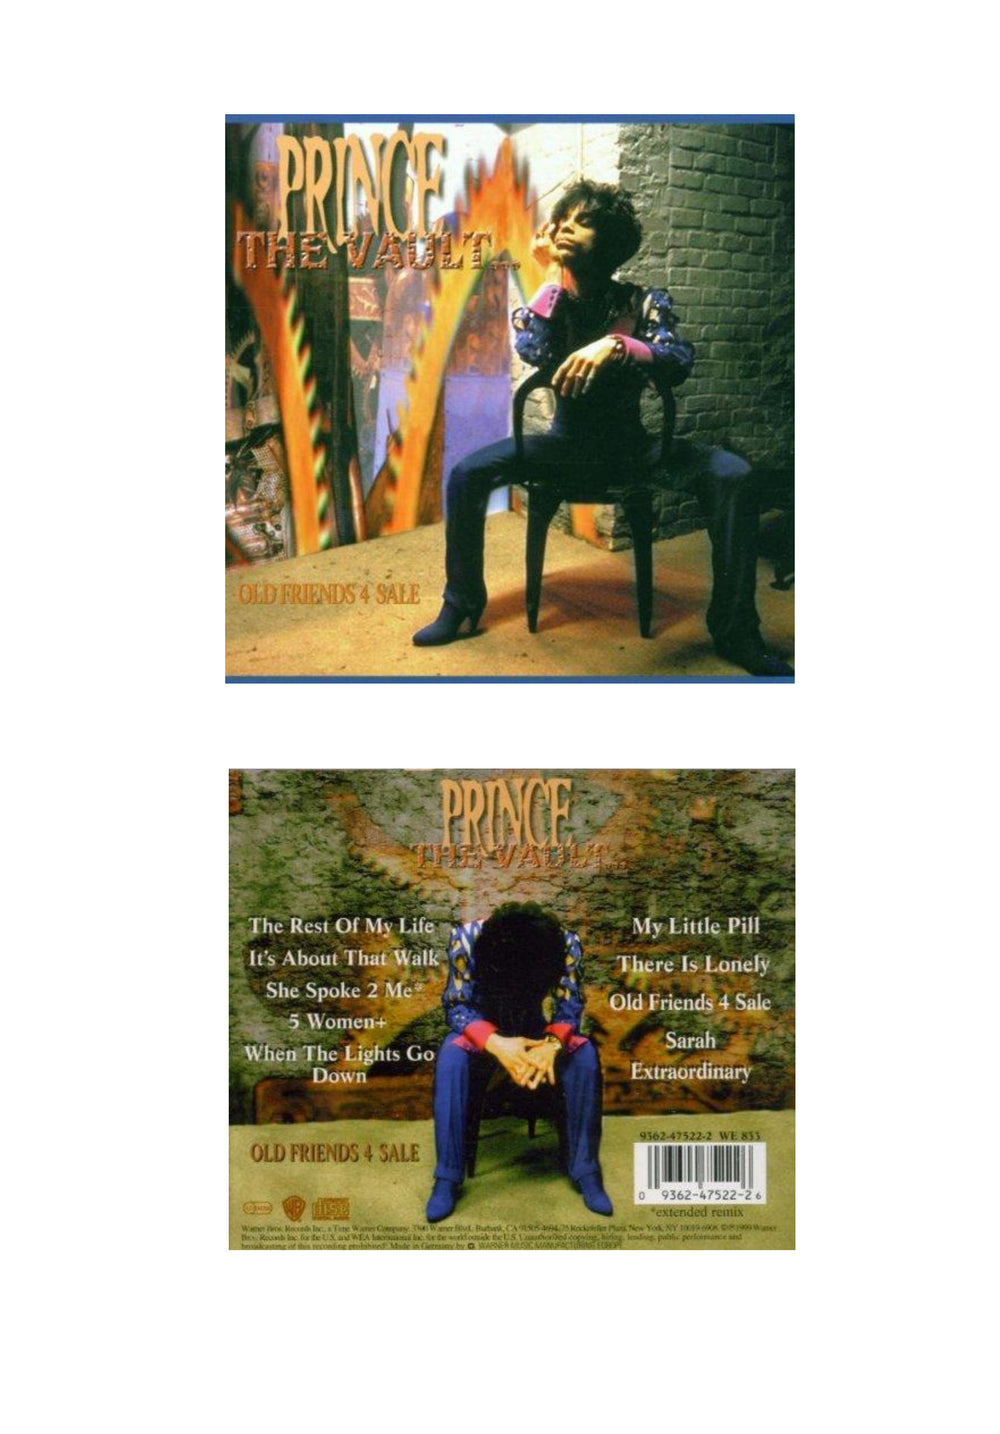 Prince The Vault - Old Friends 4 Sale Original 1999 Release CD Album WE 333